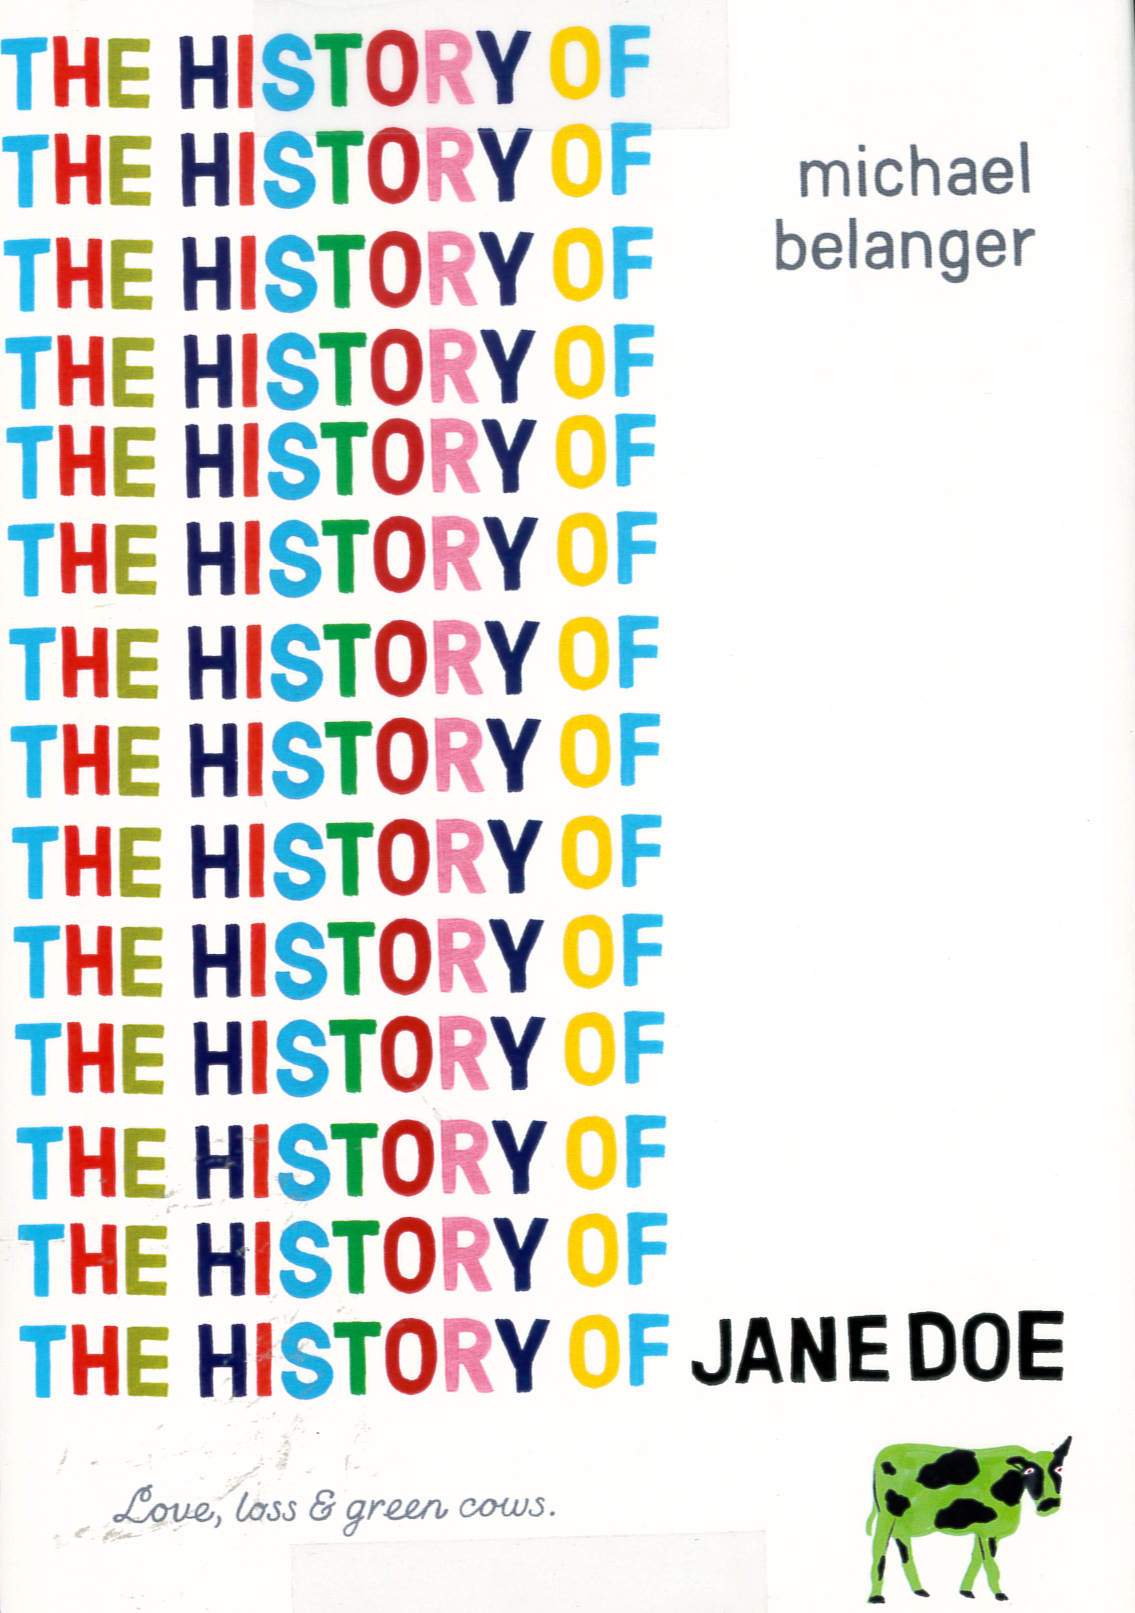 The history of Jane Doe /